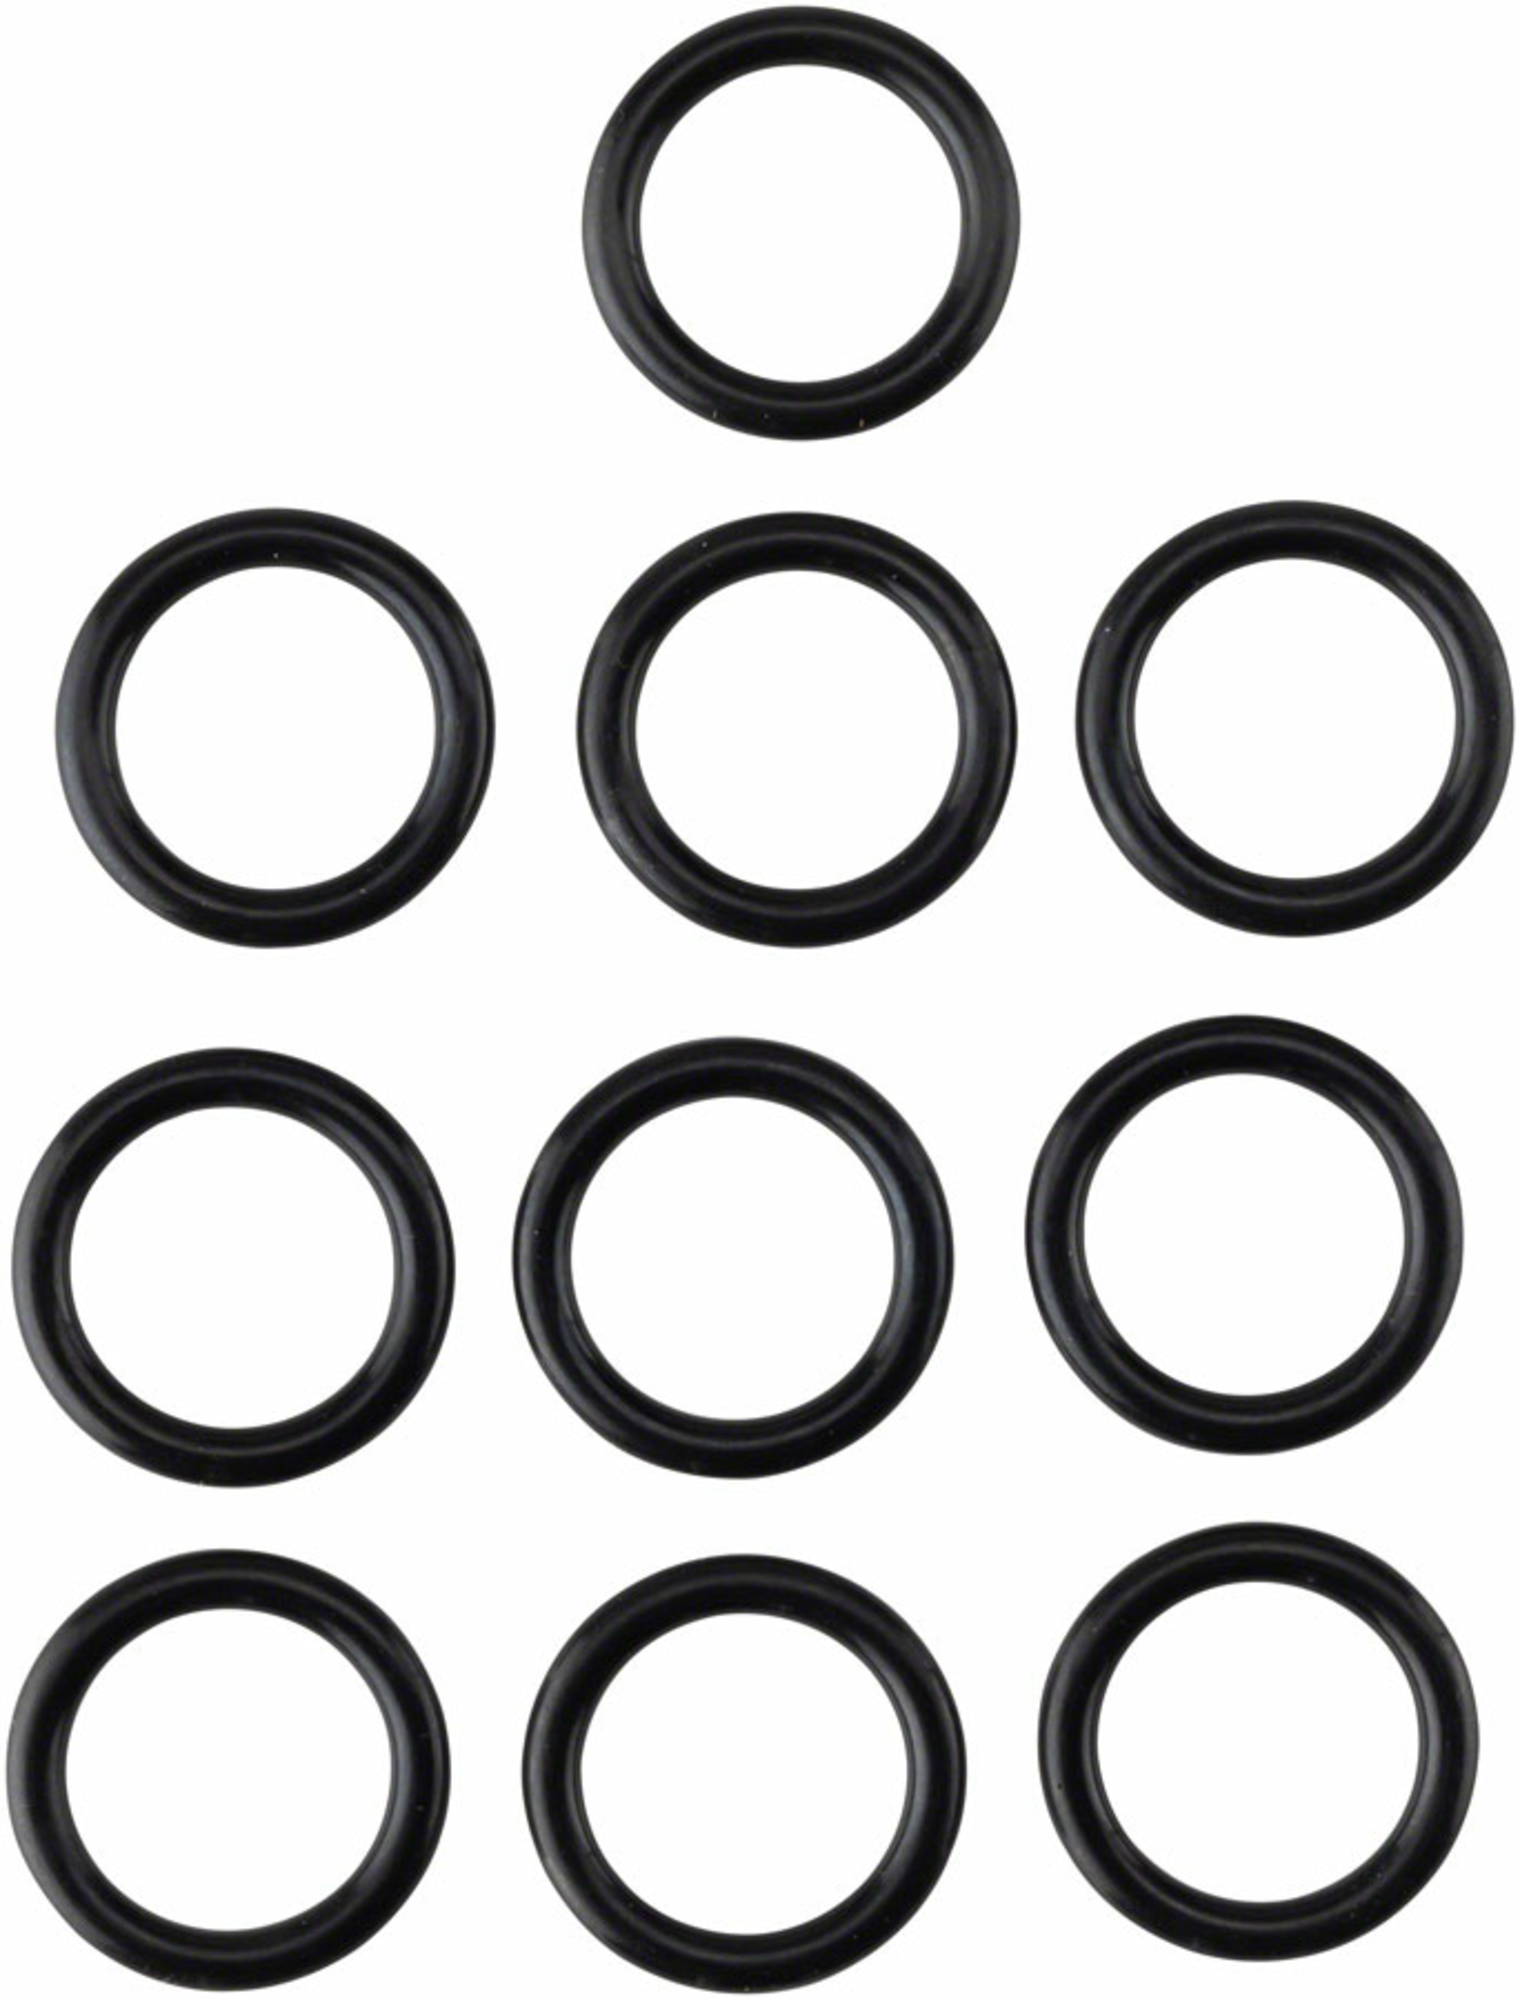 Metric O-rings 1mm CS x 20mm ID (20mmx1mm - 20x1 mm -1x20) 100 Count Orings  Bulk | eBay